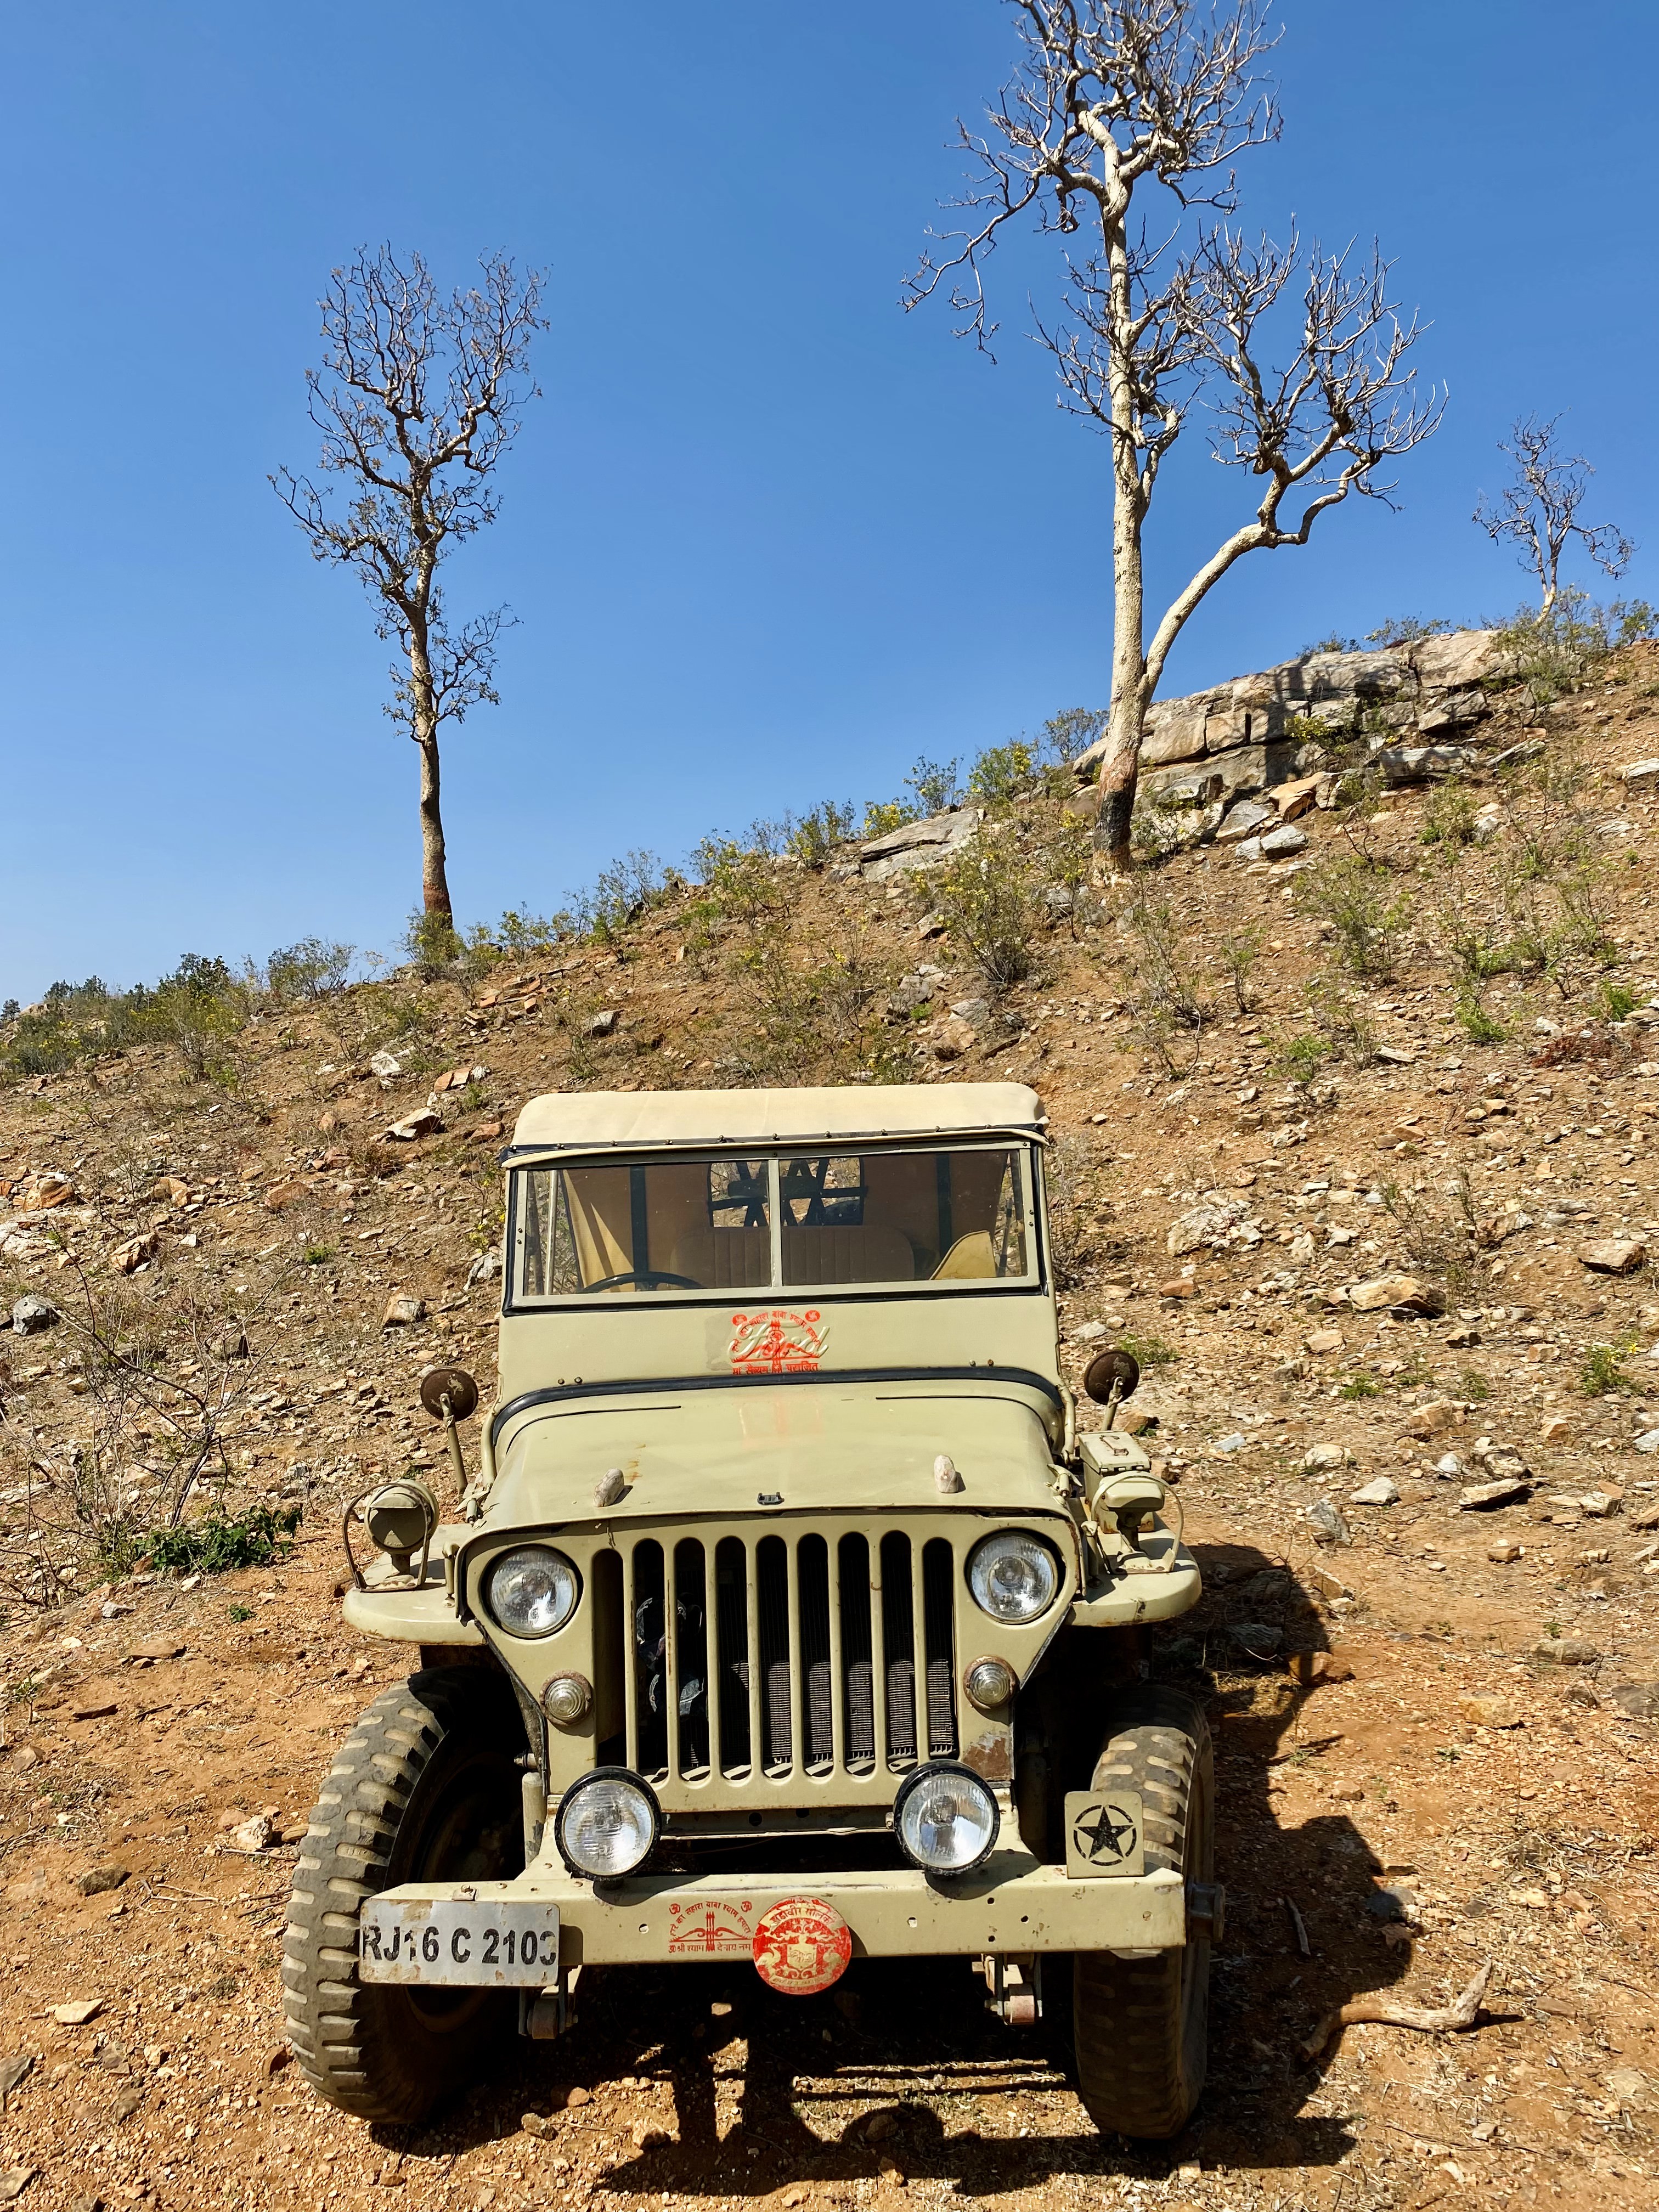 Mobil jeep yang mengangkut wisatawan safari